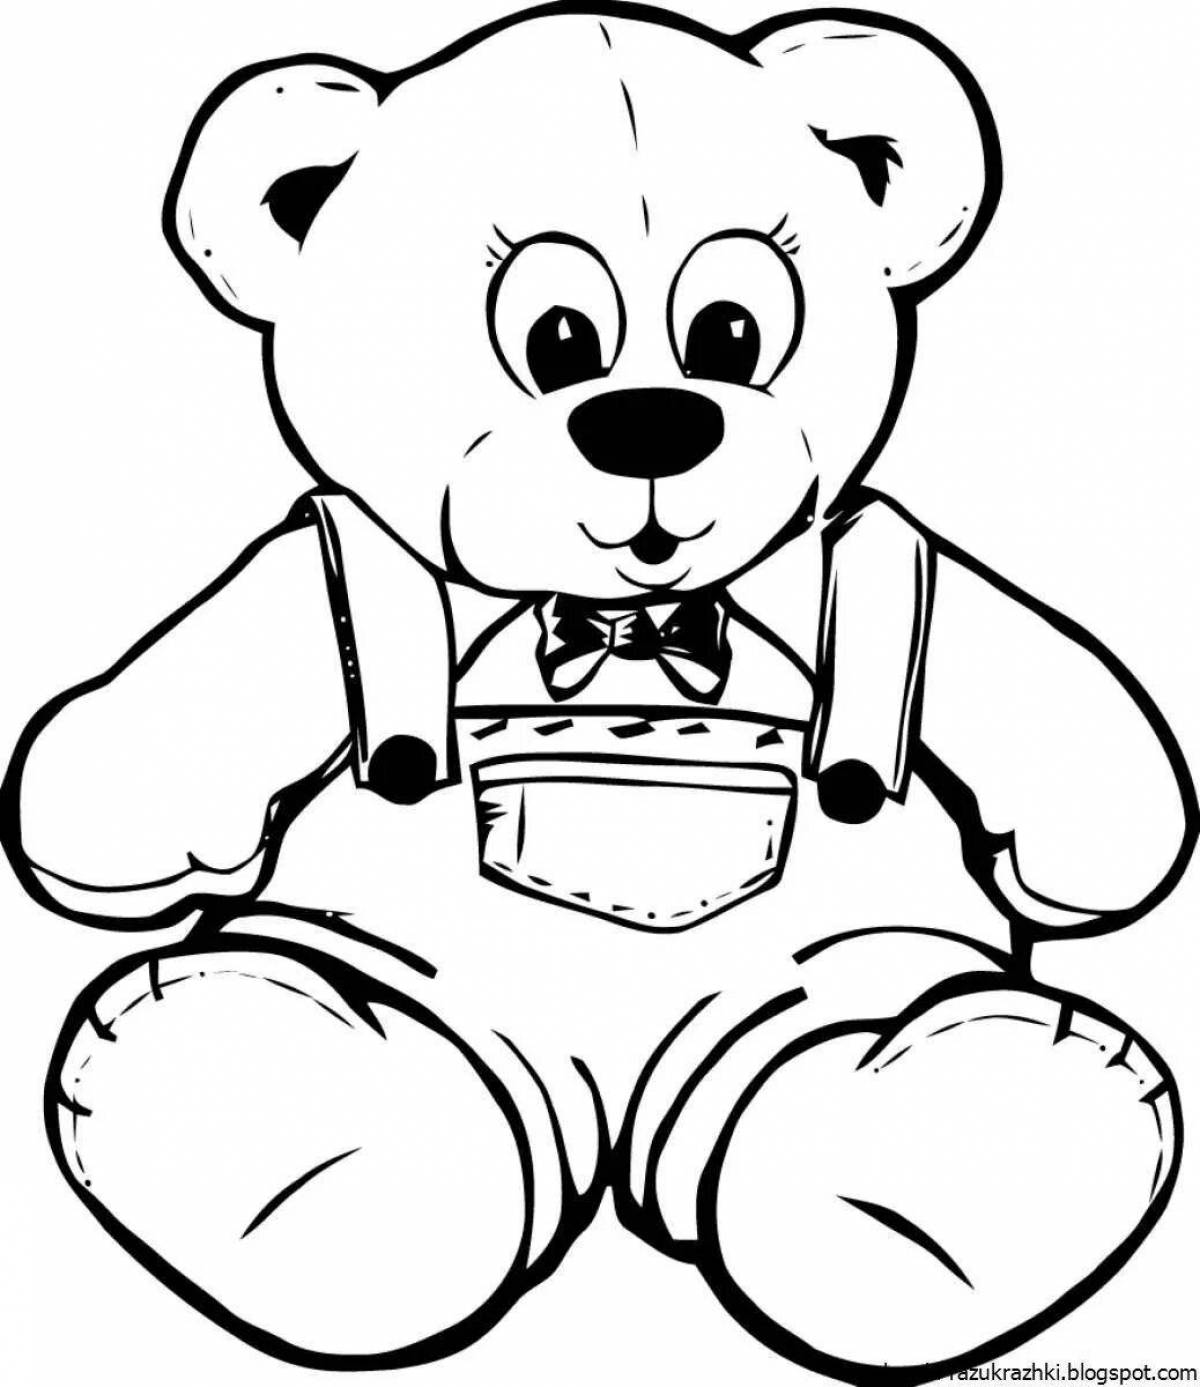 Joyful teddy bear drawing